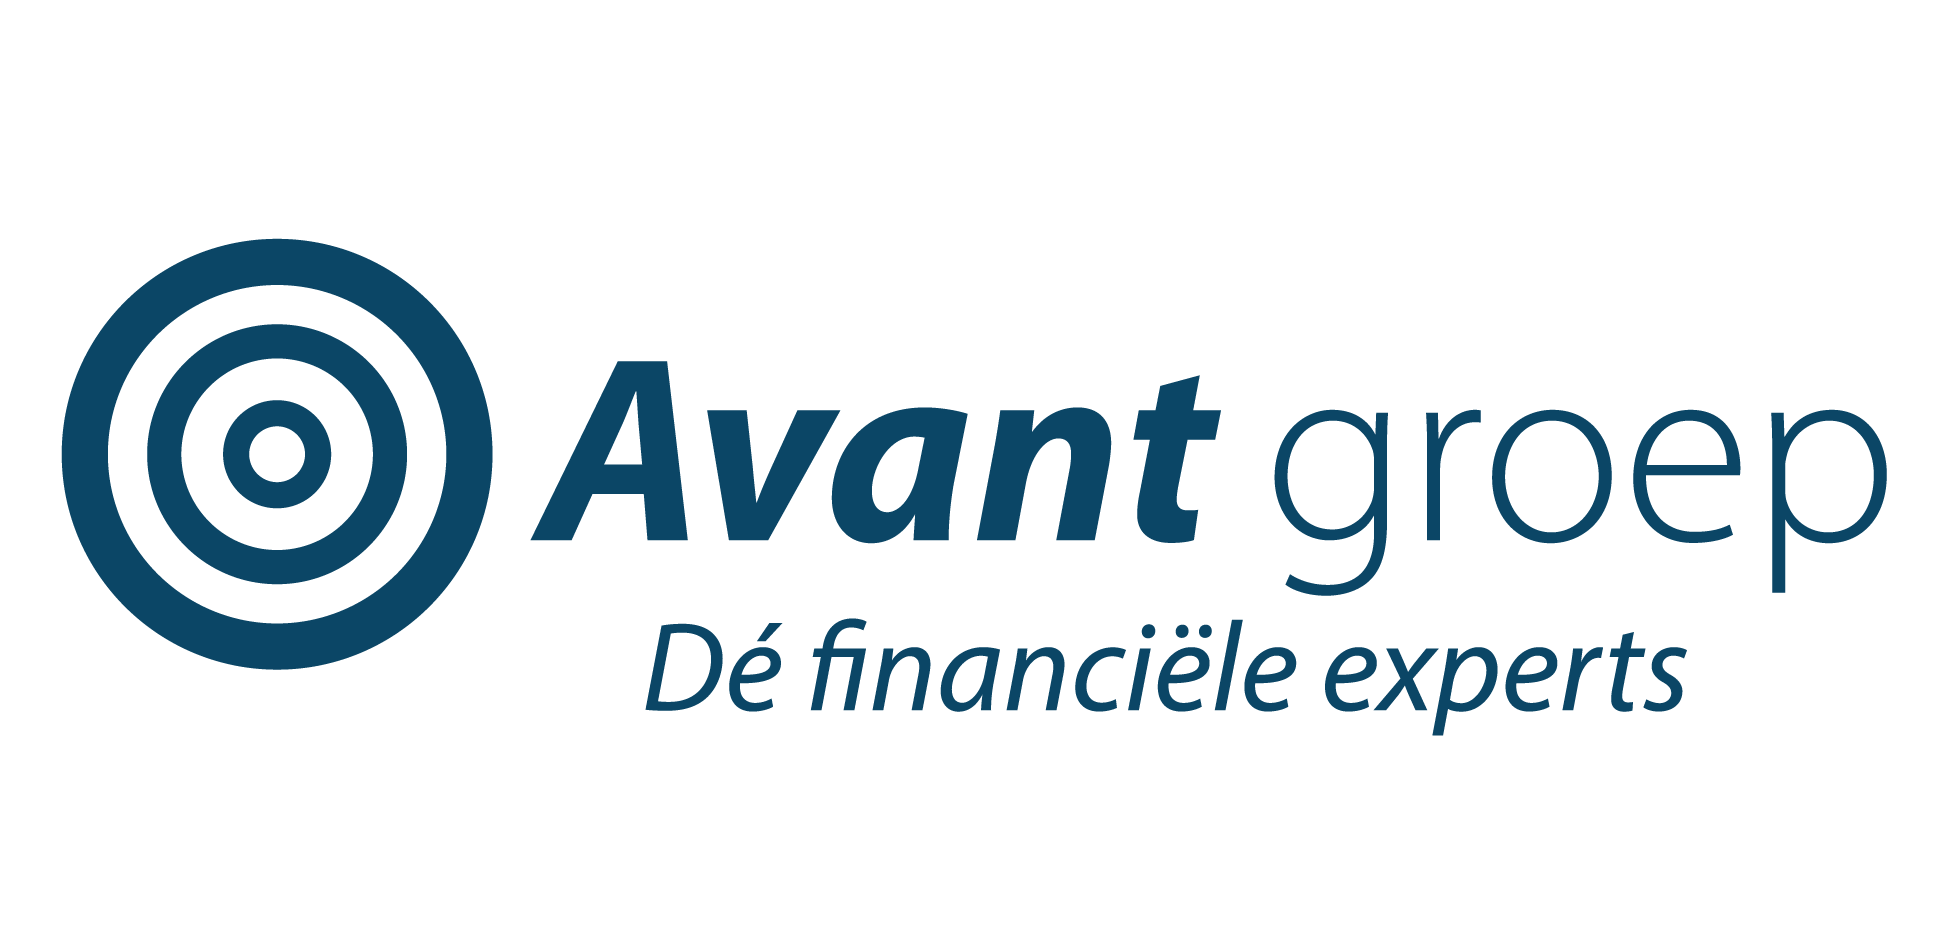 Logo Avant groep De financiele experts witte achtergrond blauw logo e1679055595938